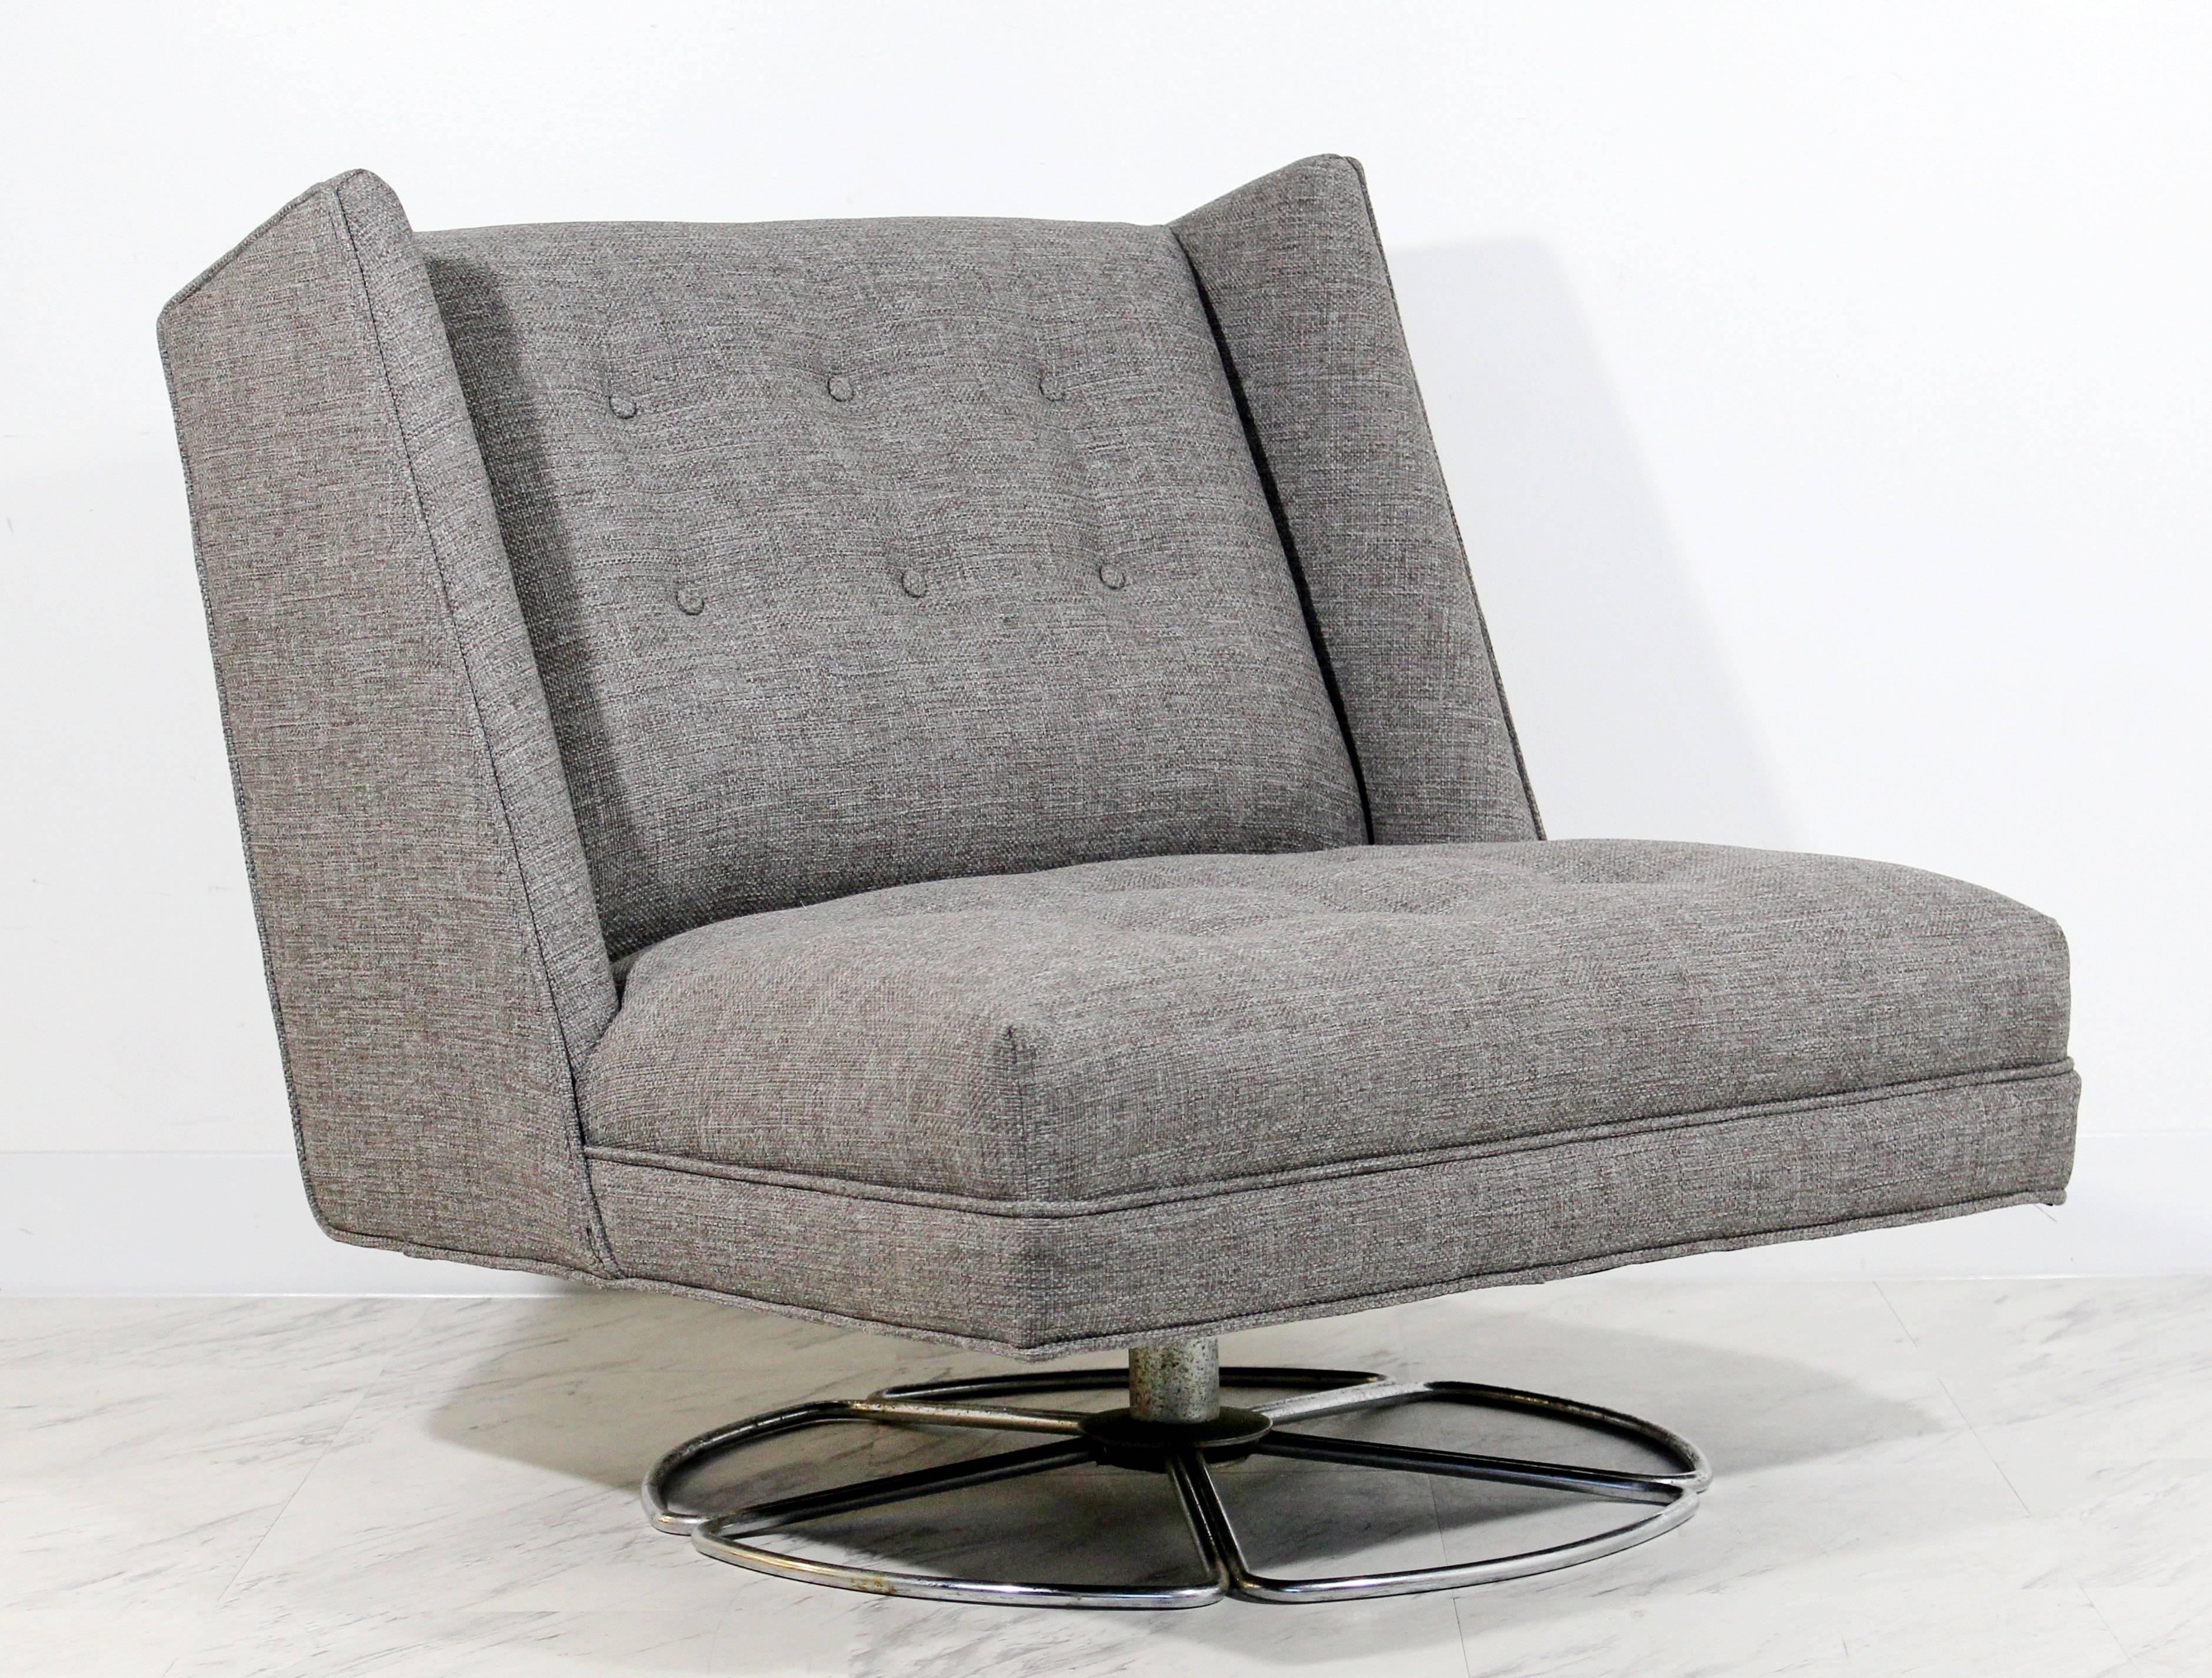 mid century modern swivel chair